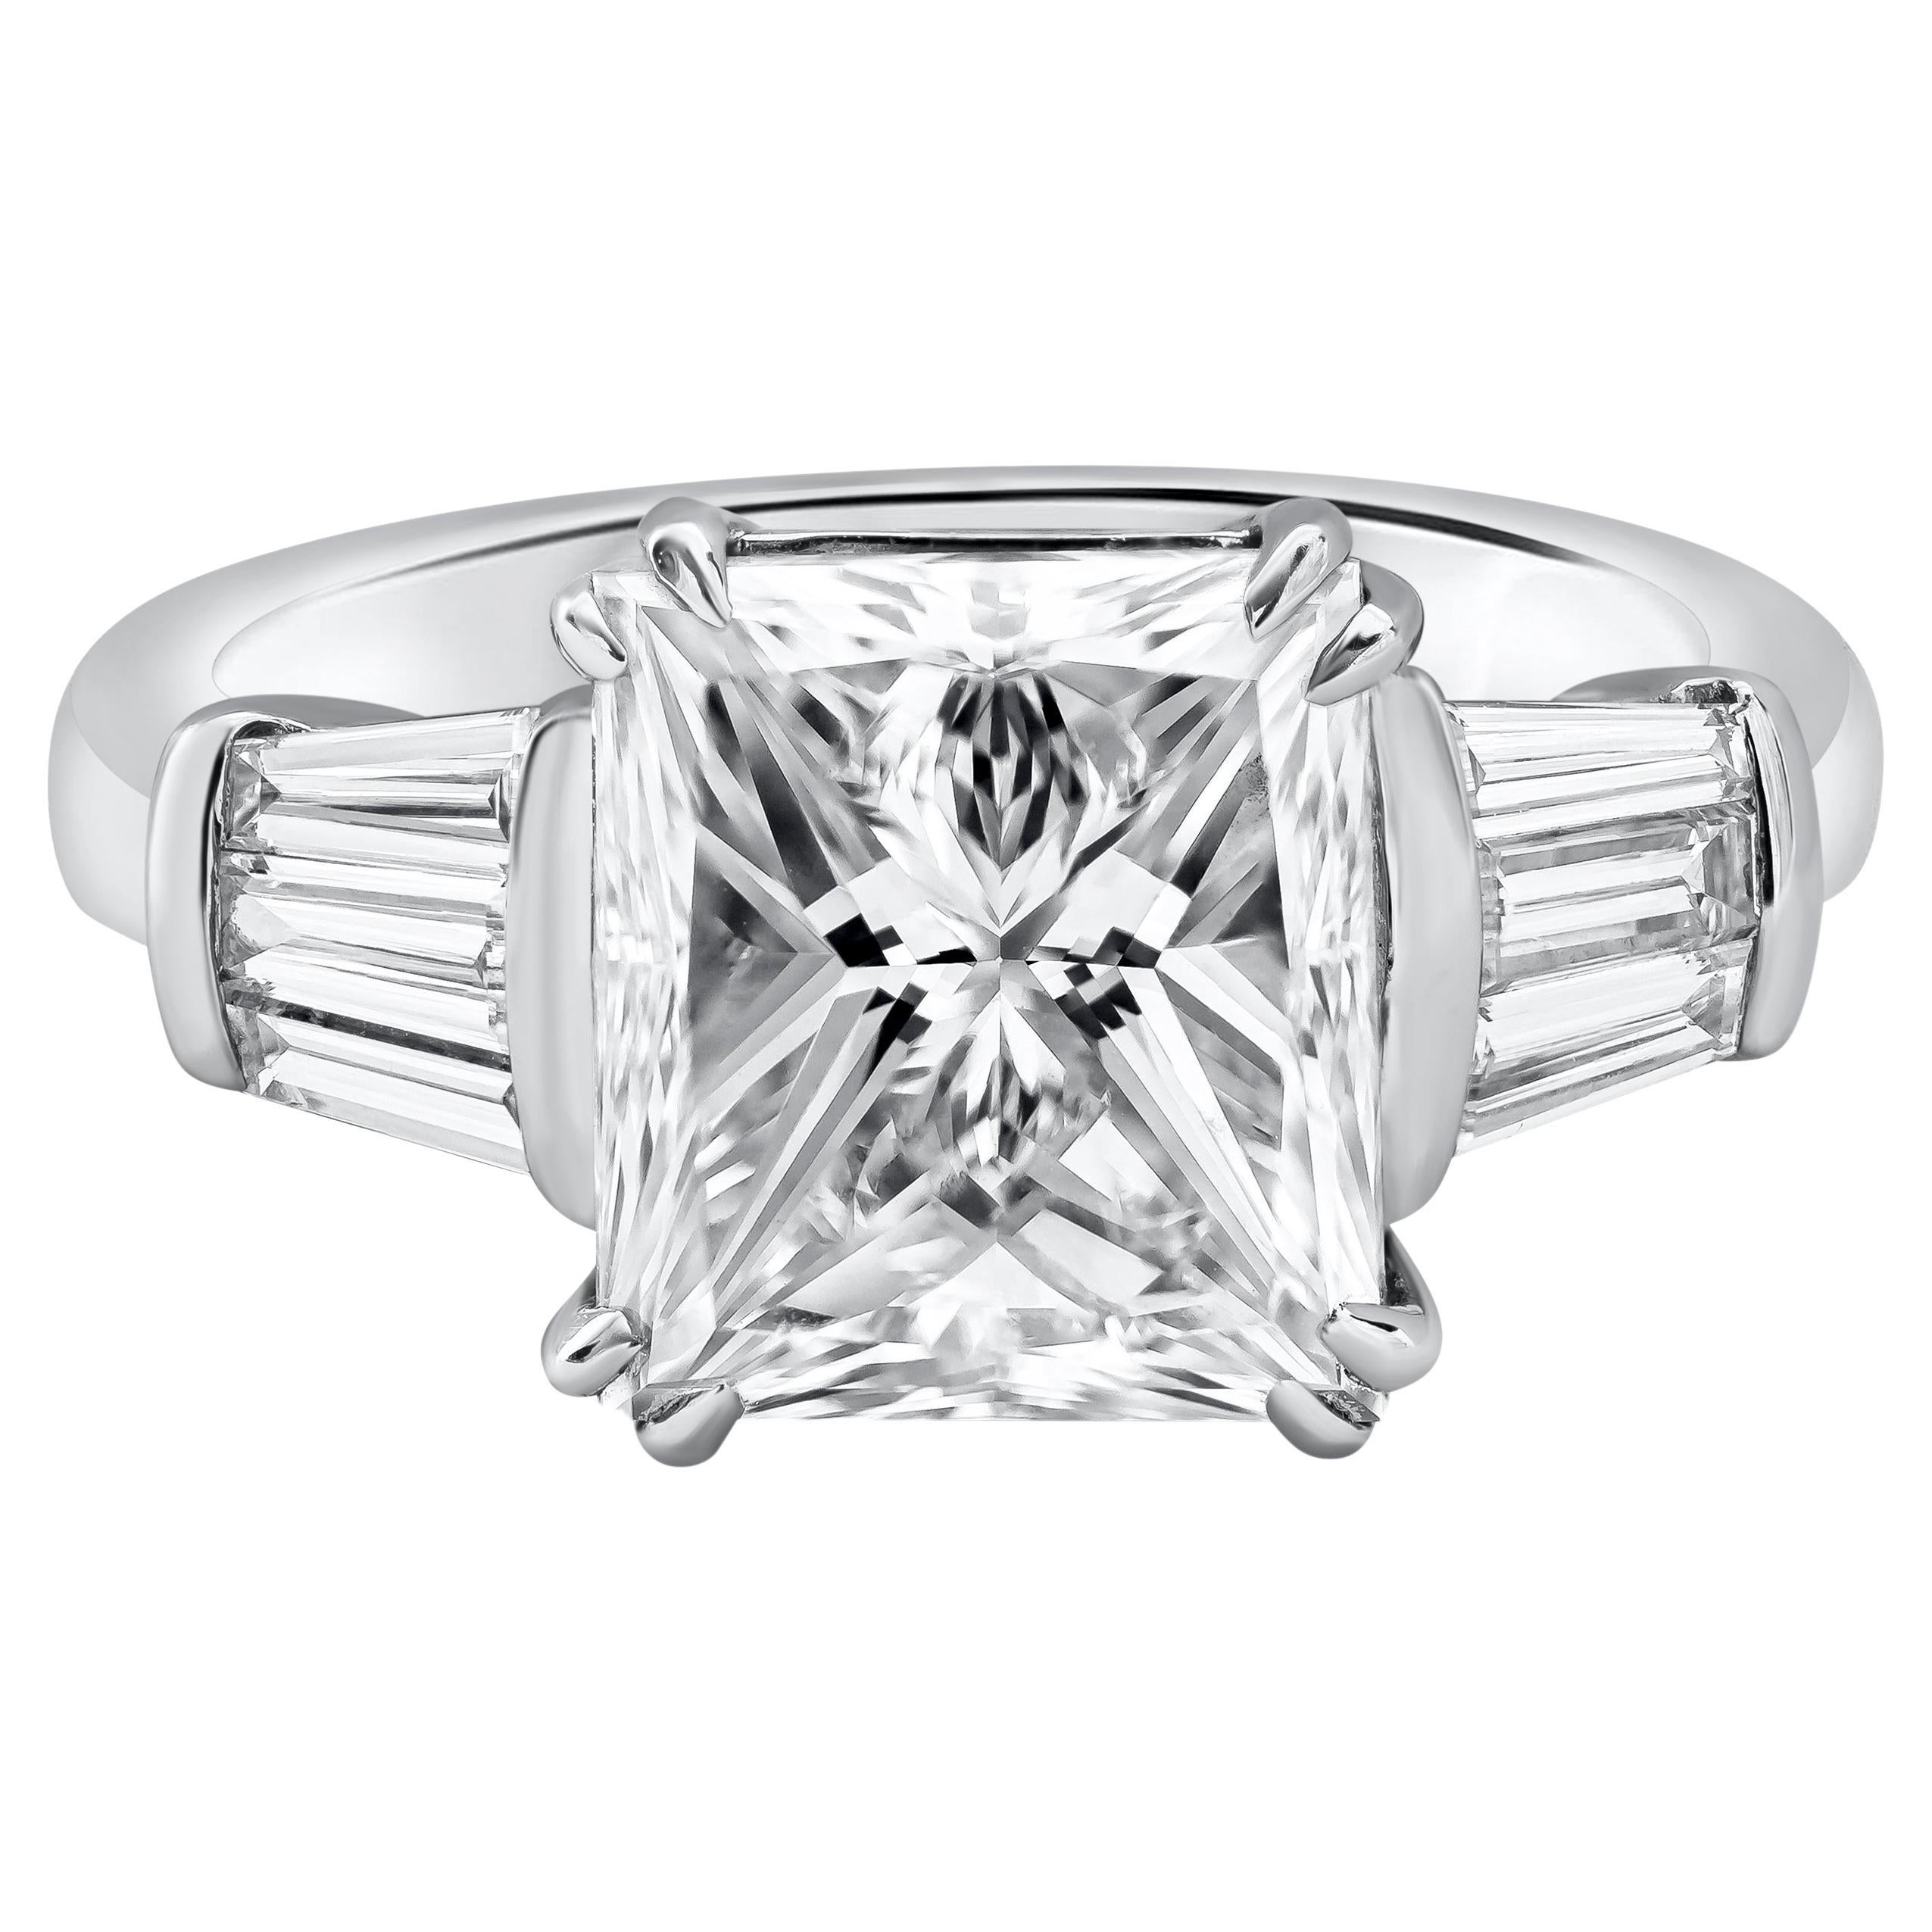 Roman Malakov GIA Certified 5.03 Carat Princess Cut Diamond Engagement Ring For Sale